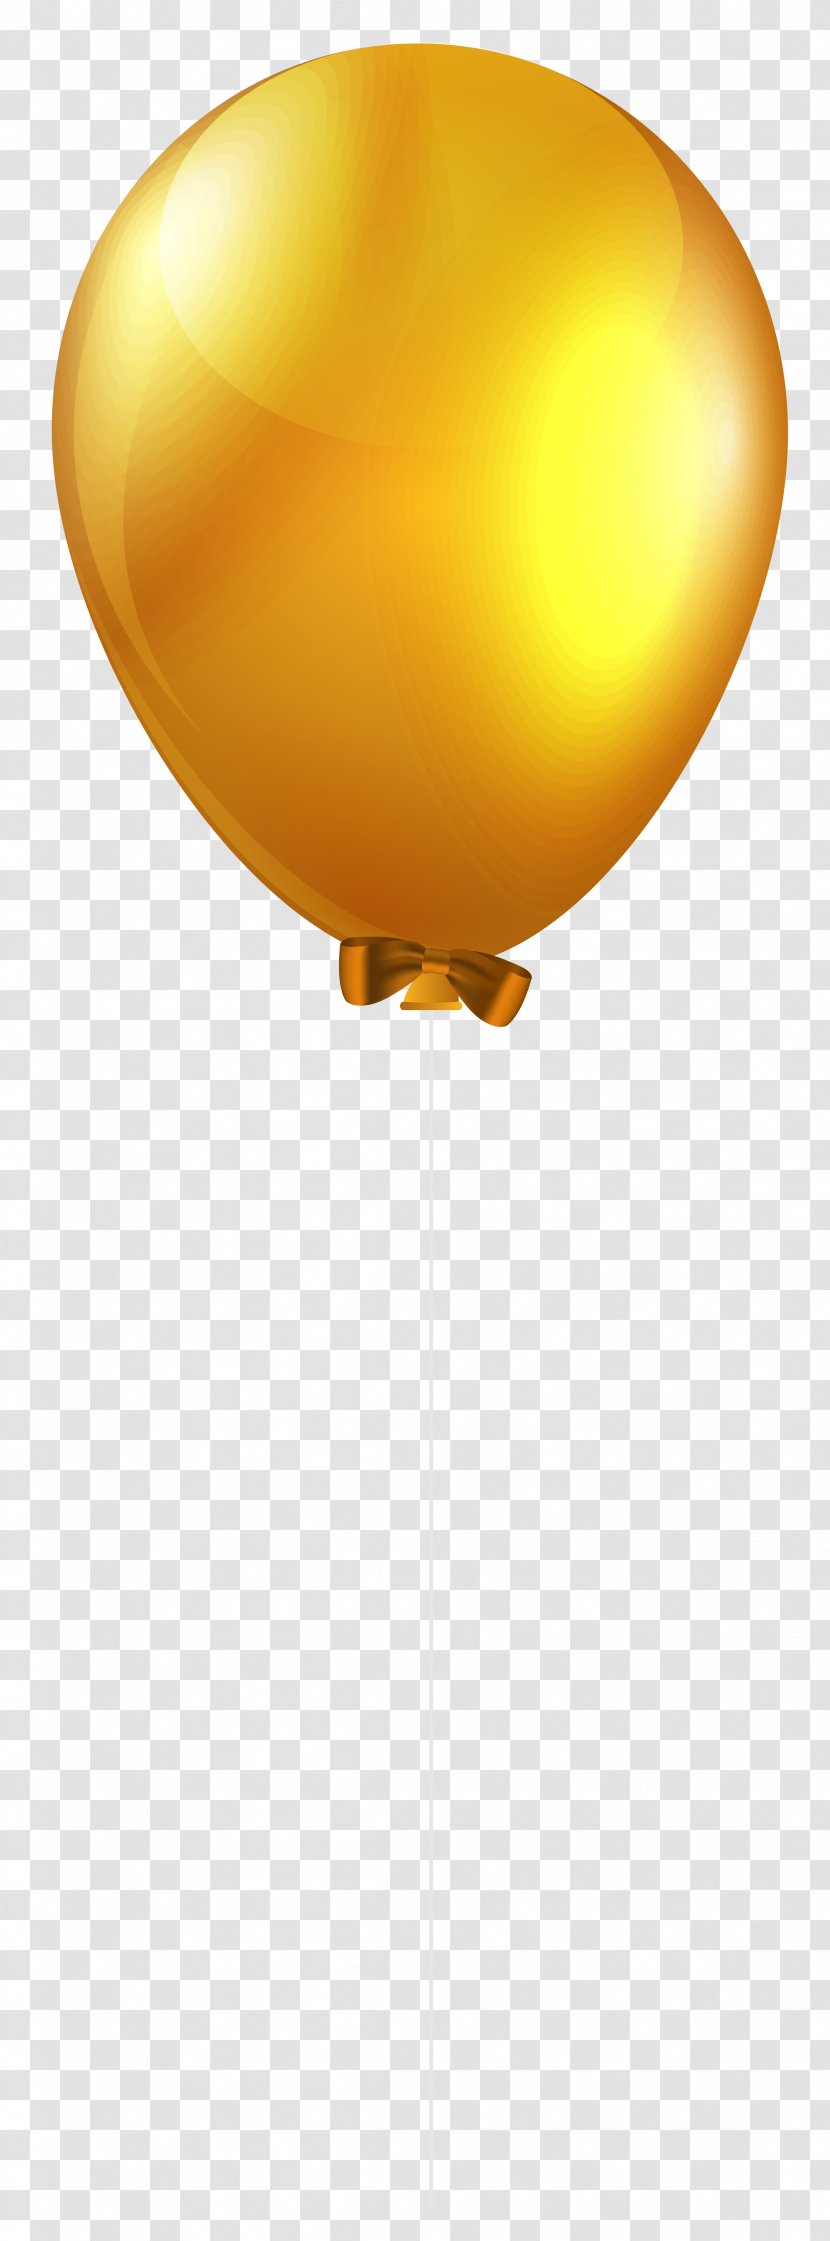 Yellow Lighting Font Design - Produce - Single Balloon Clip Art Image Transparent PNG